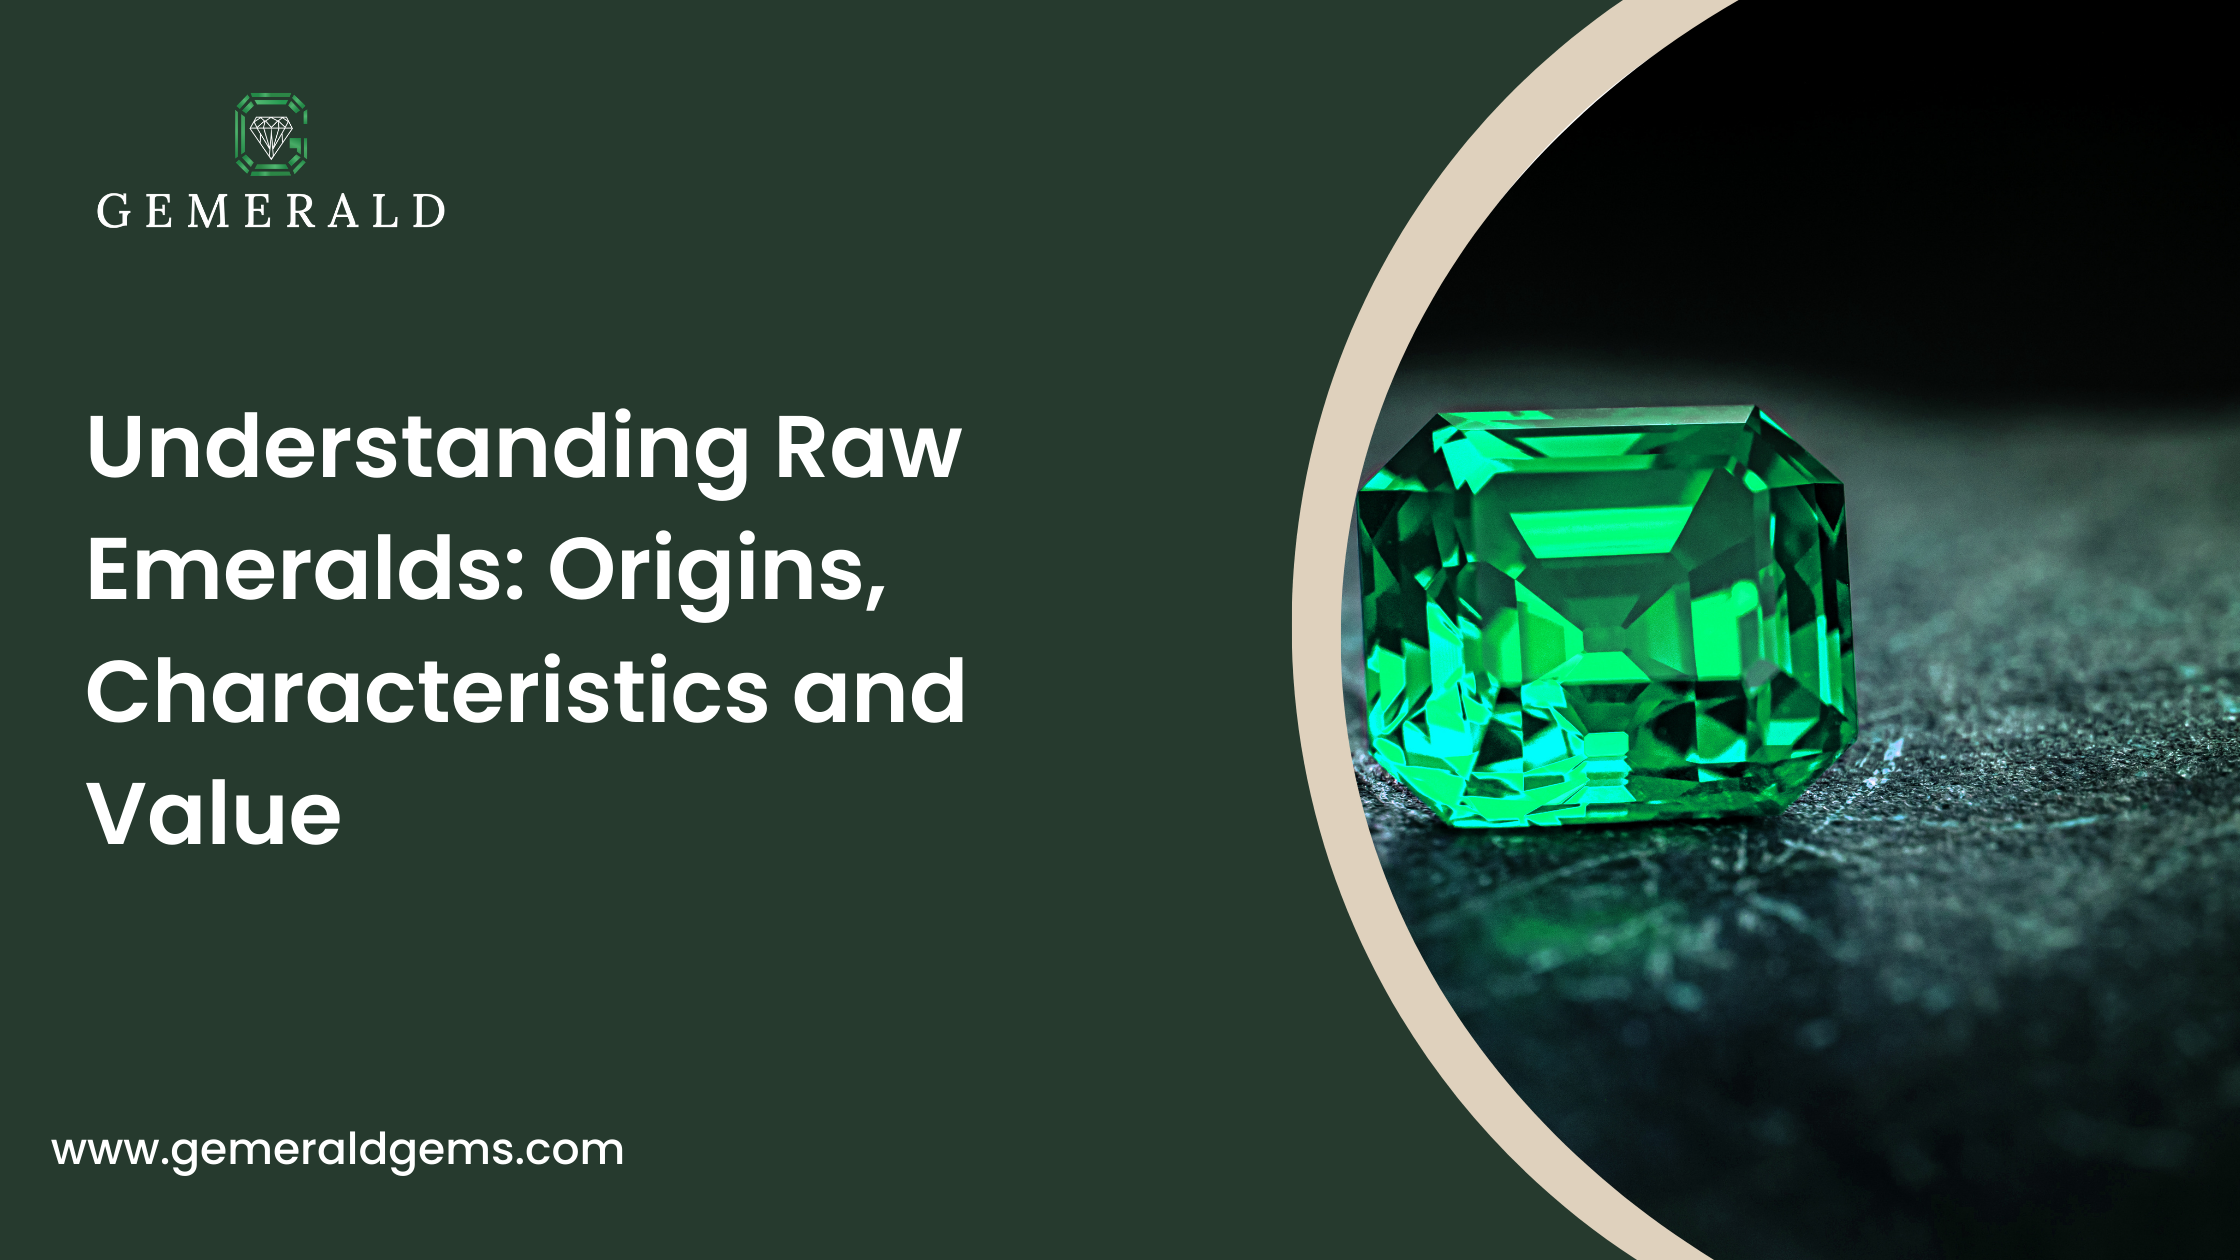 Understanding Raw Emeralds Origins, Characteristics and Value